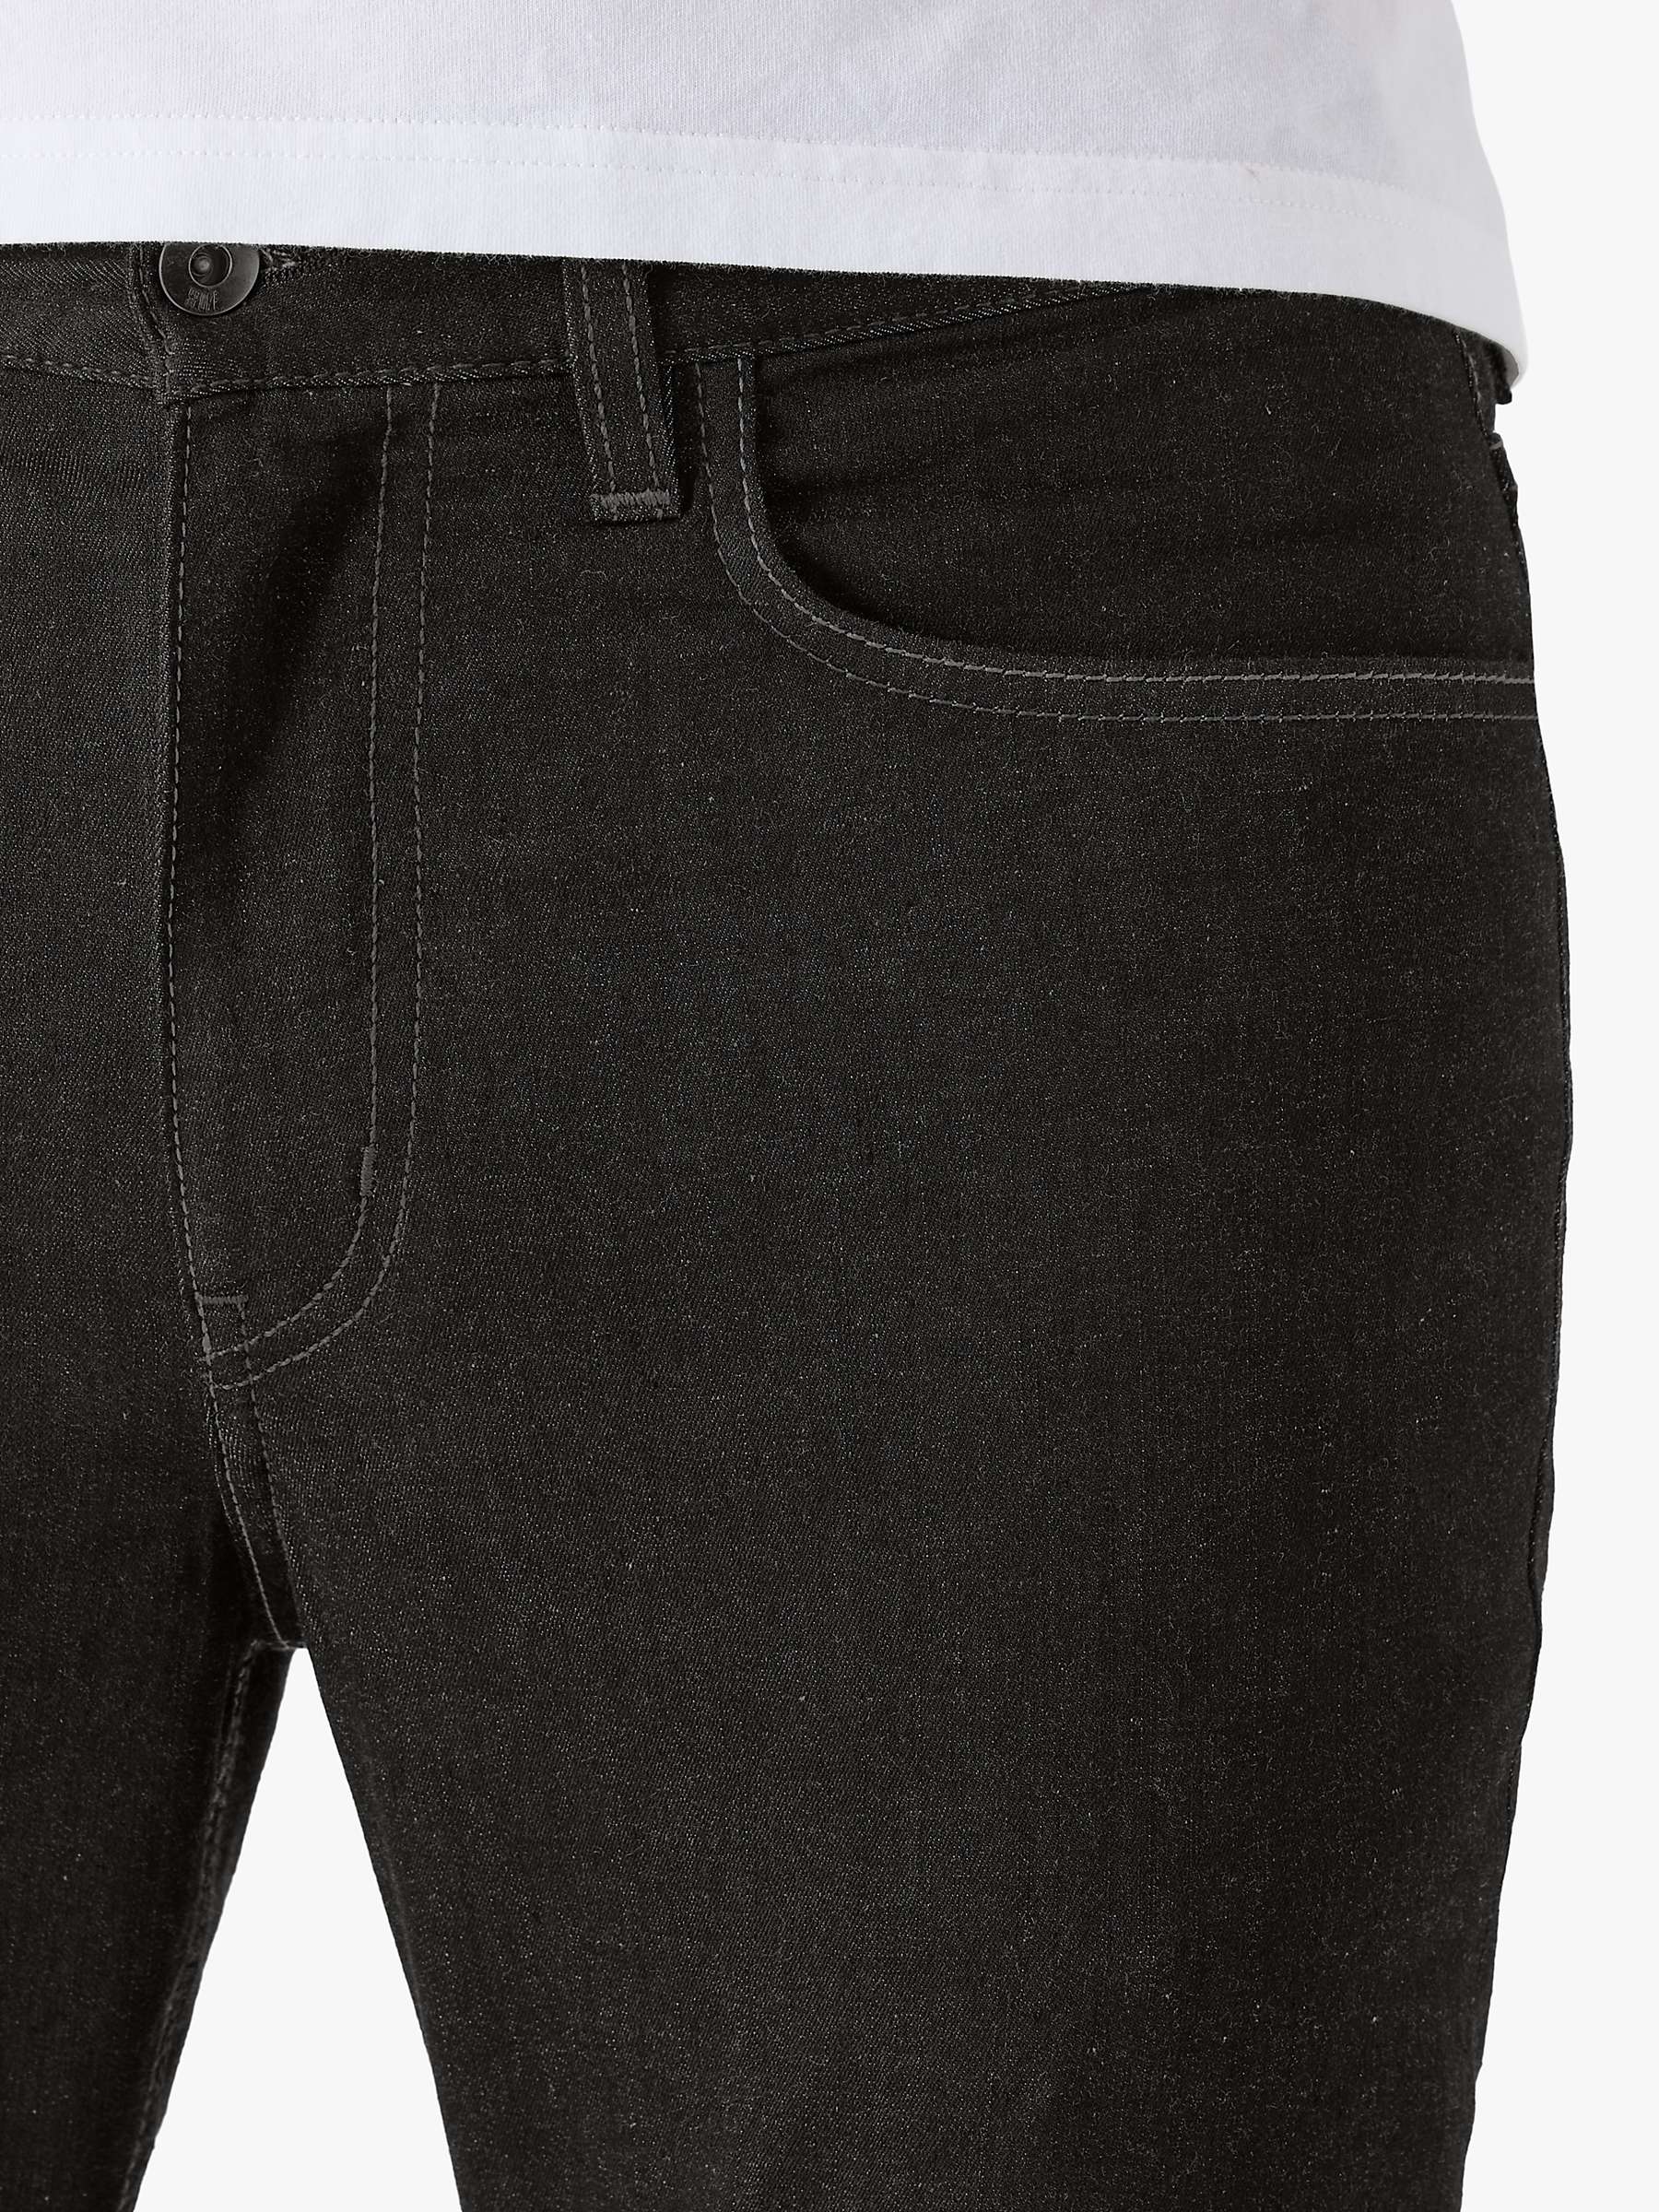 Buy SPOKE 10oz Travel Denim Broad Thigh Jeans Online at johnlewis.com